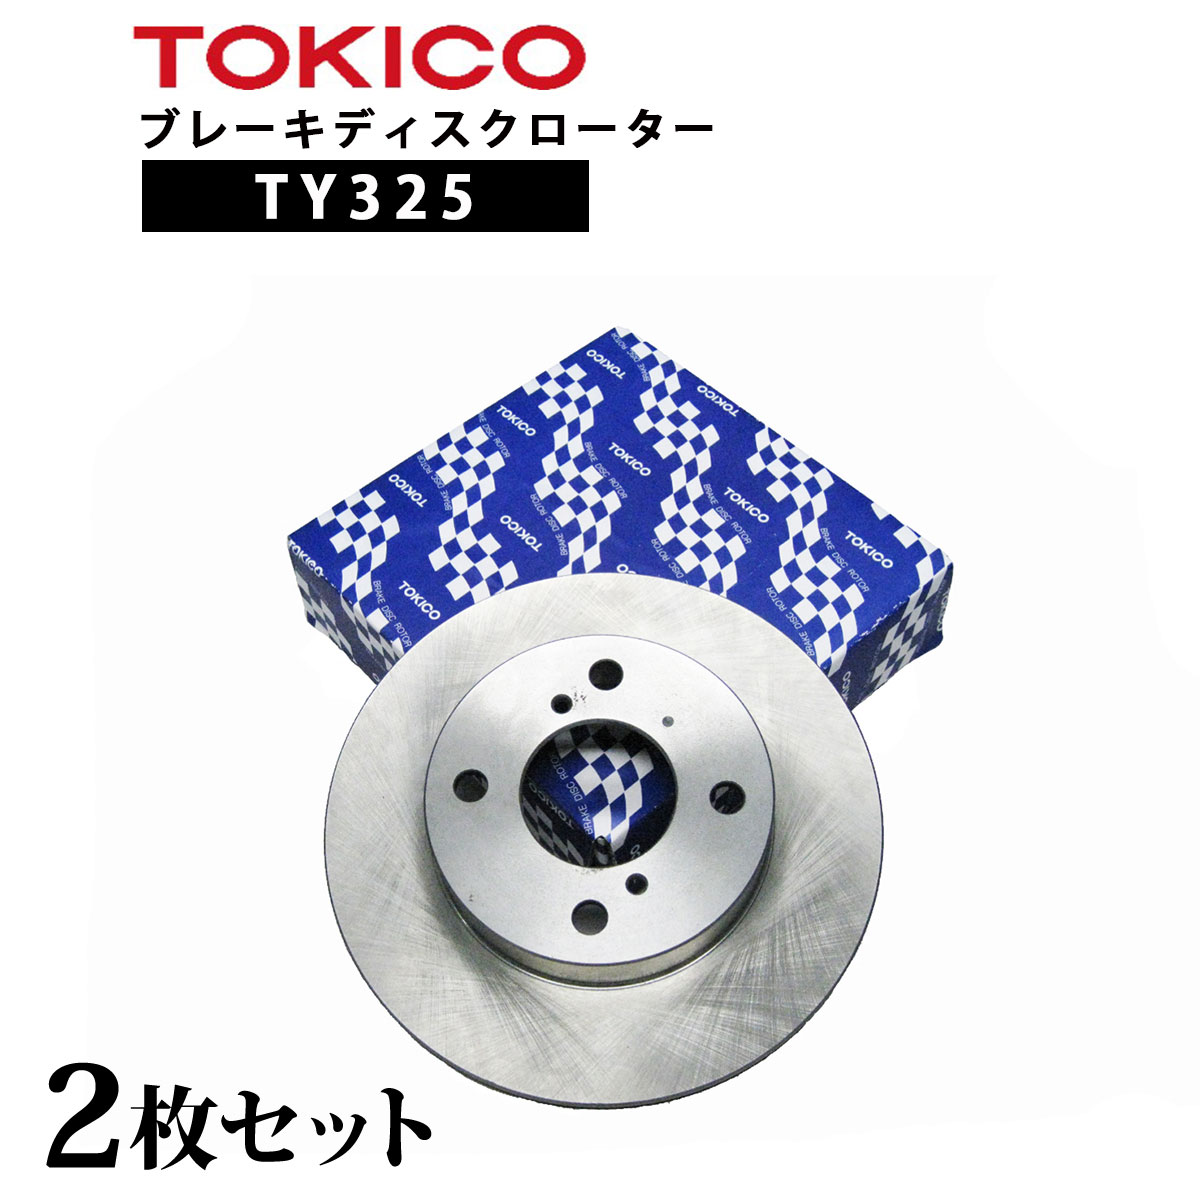 TY325 TOKICO ブレーキディスクローター リヤ 2枚 左右セット トキコ 日立 適合 純正 スバル 26700-FG000 インプレッサ R GH8 他社 F6-020BP F6R091J